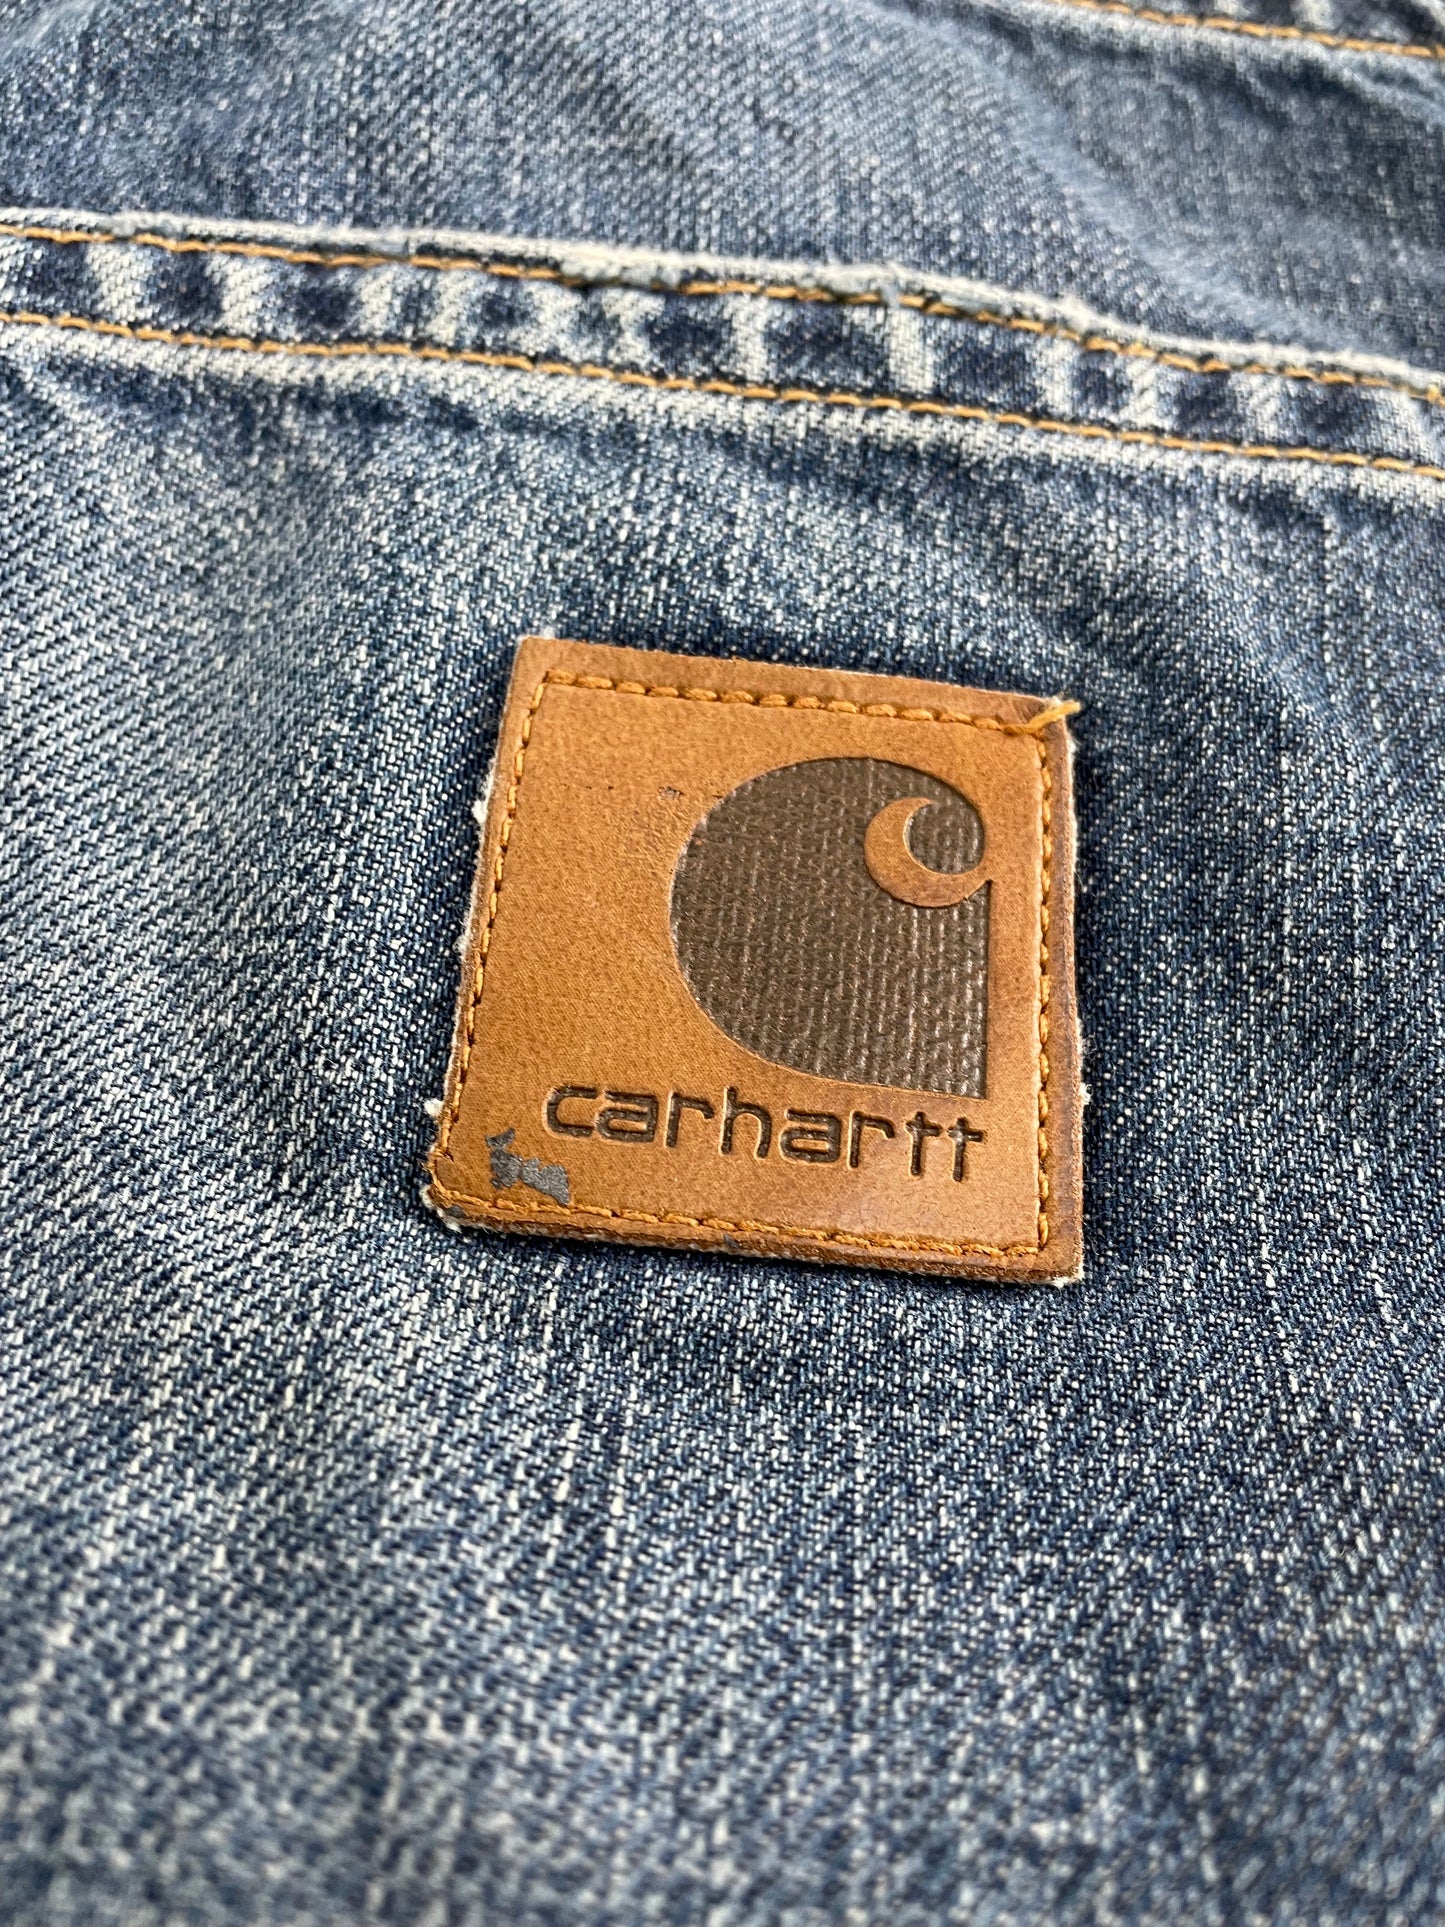 00s Carhartt Jeans Blue  33 x 32